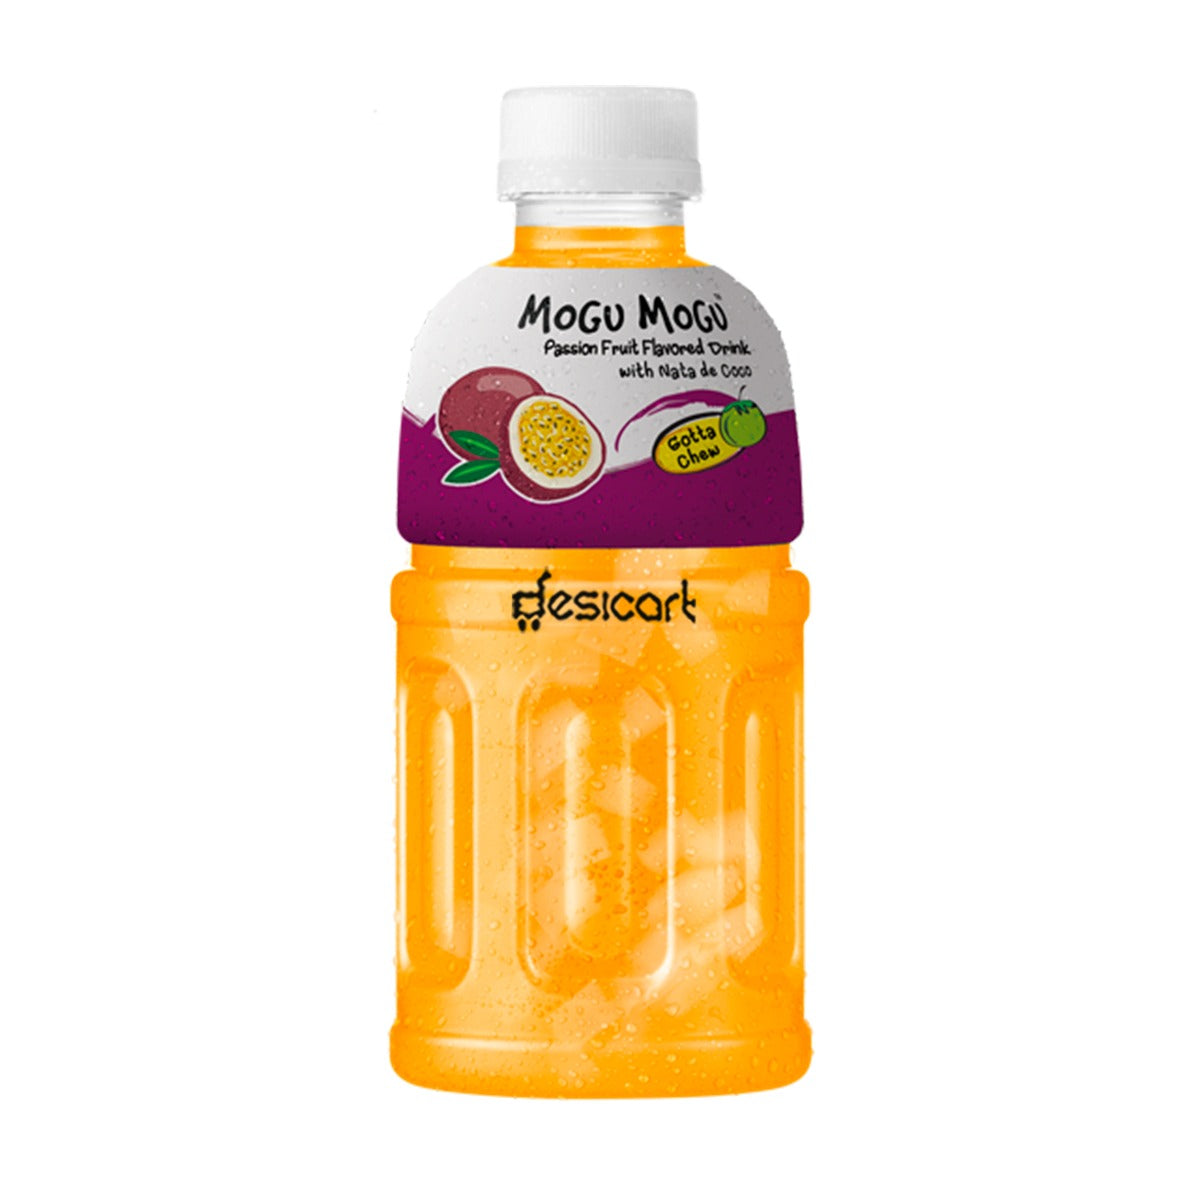 MOGU MOGU PASSION FRUIT FLAVOURED DRINK 320ML